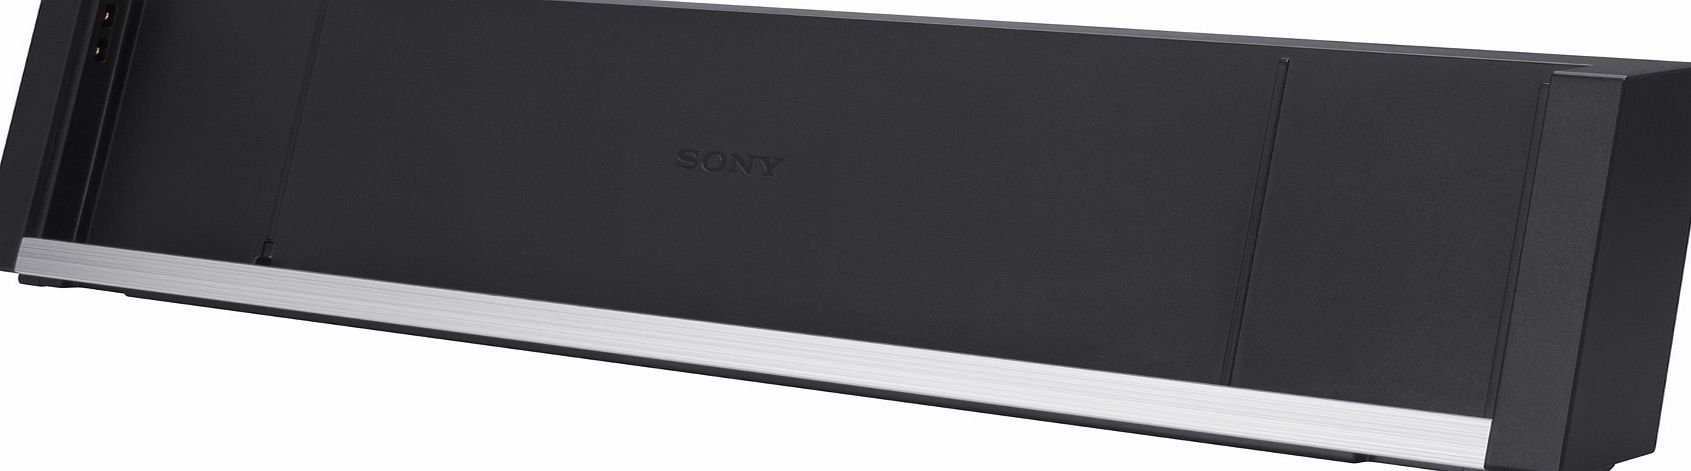 Sony SGPDS5-CE